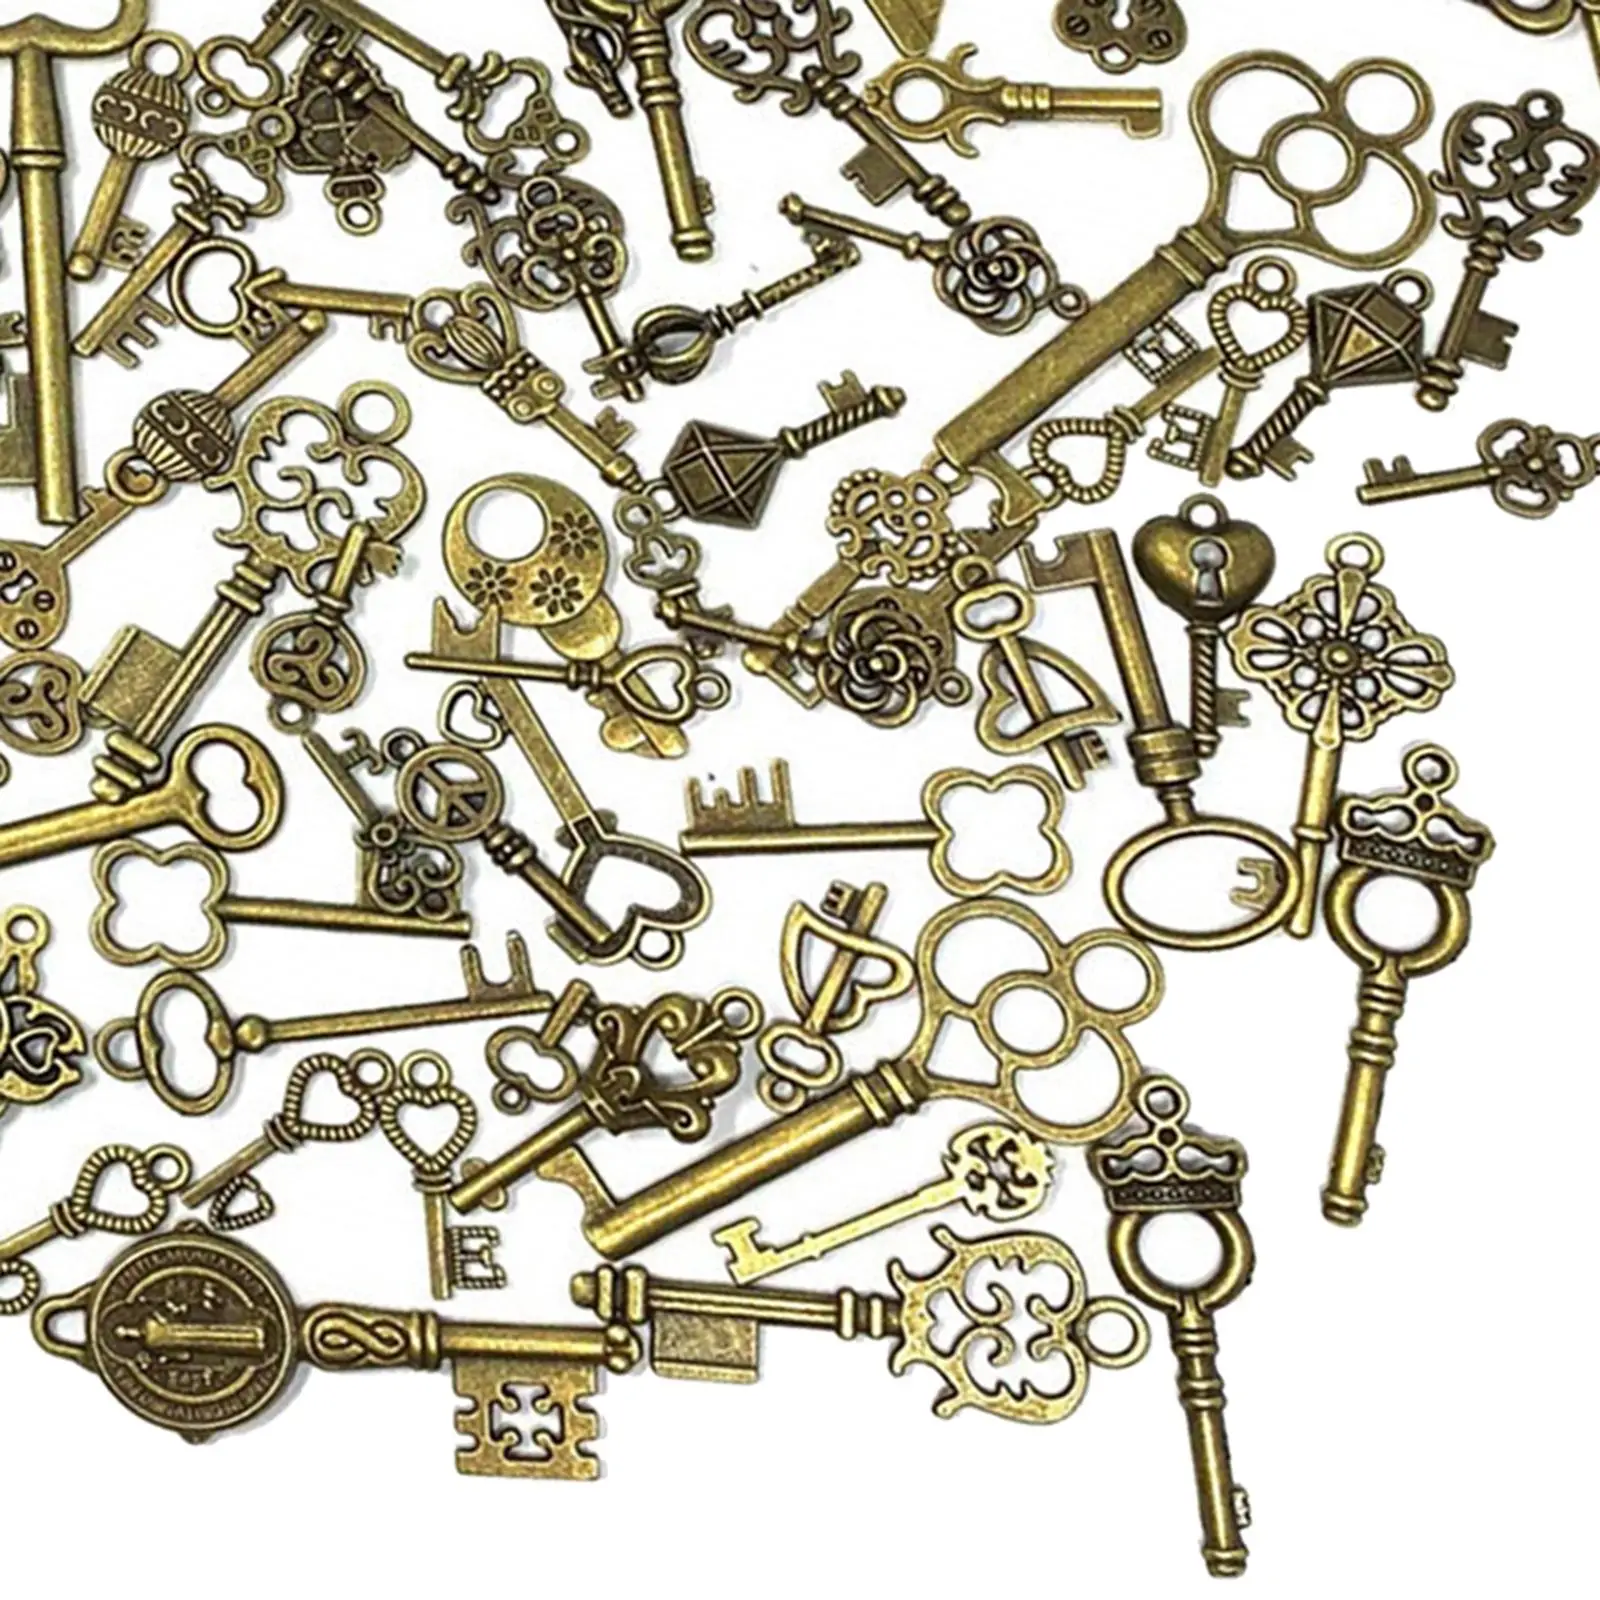 125Pcs Vintage Style Skeleton Key Charms for Scrapbook Decoration Key Chains